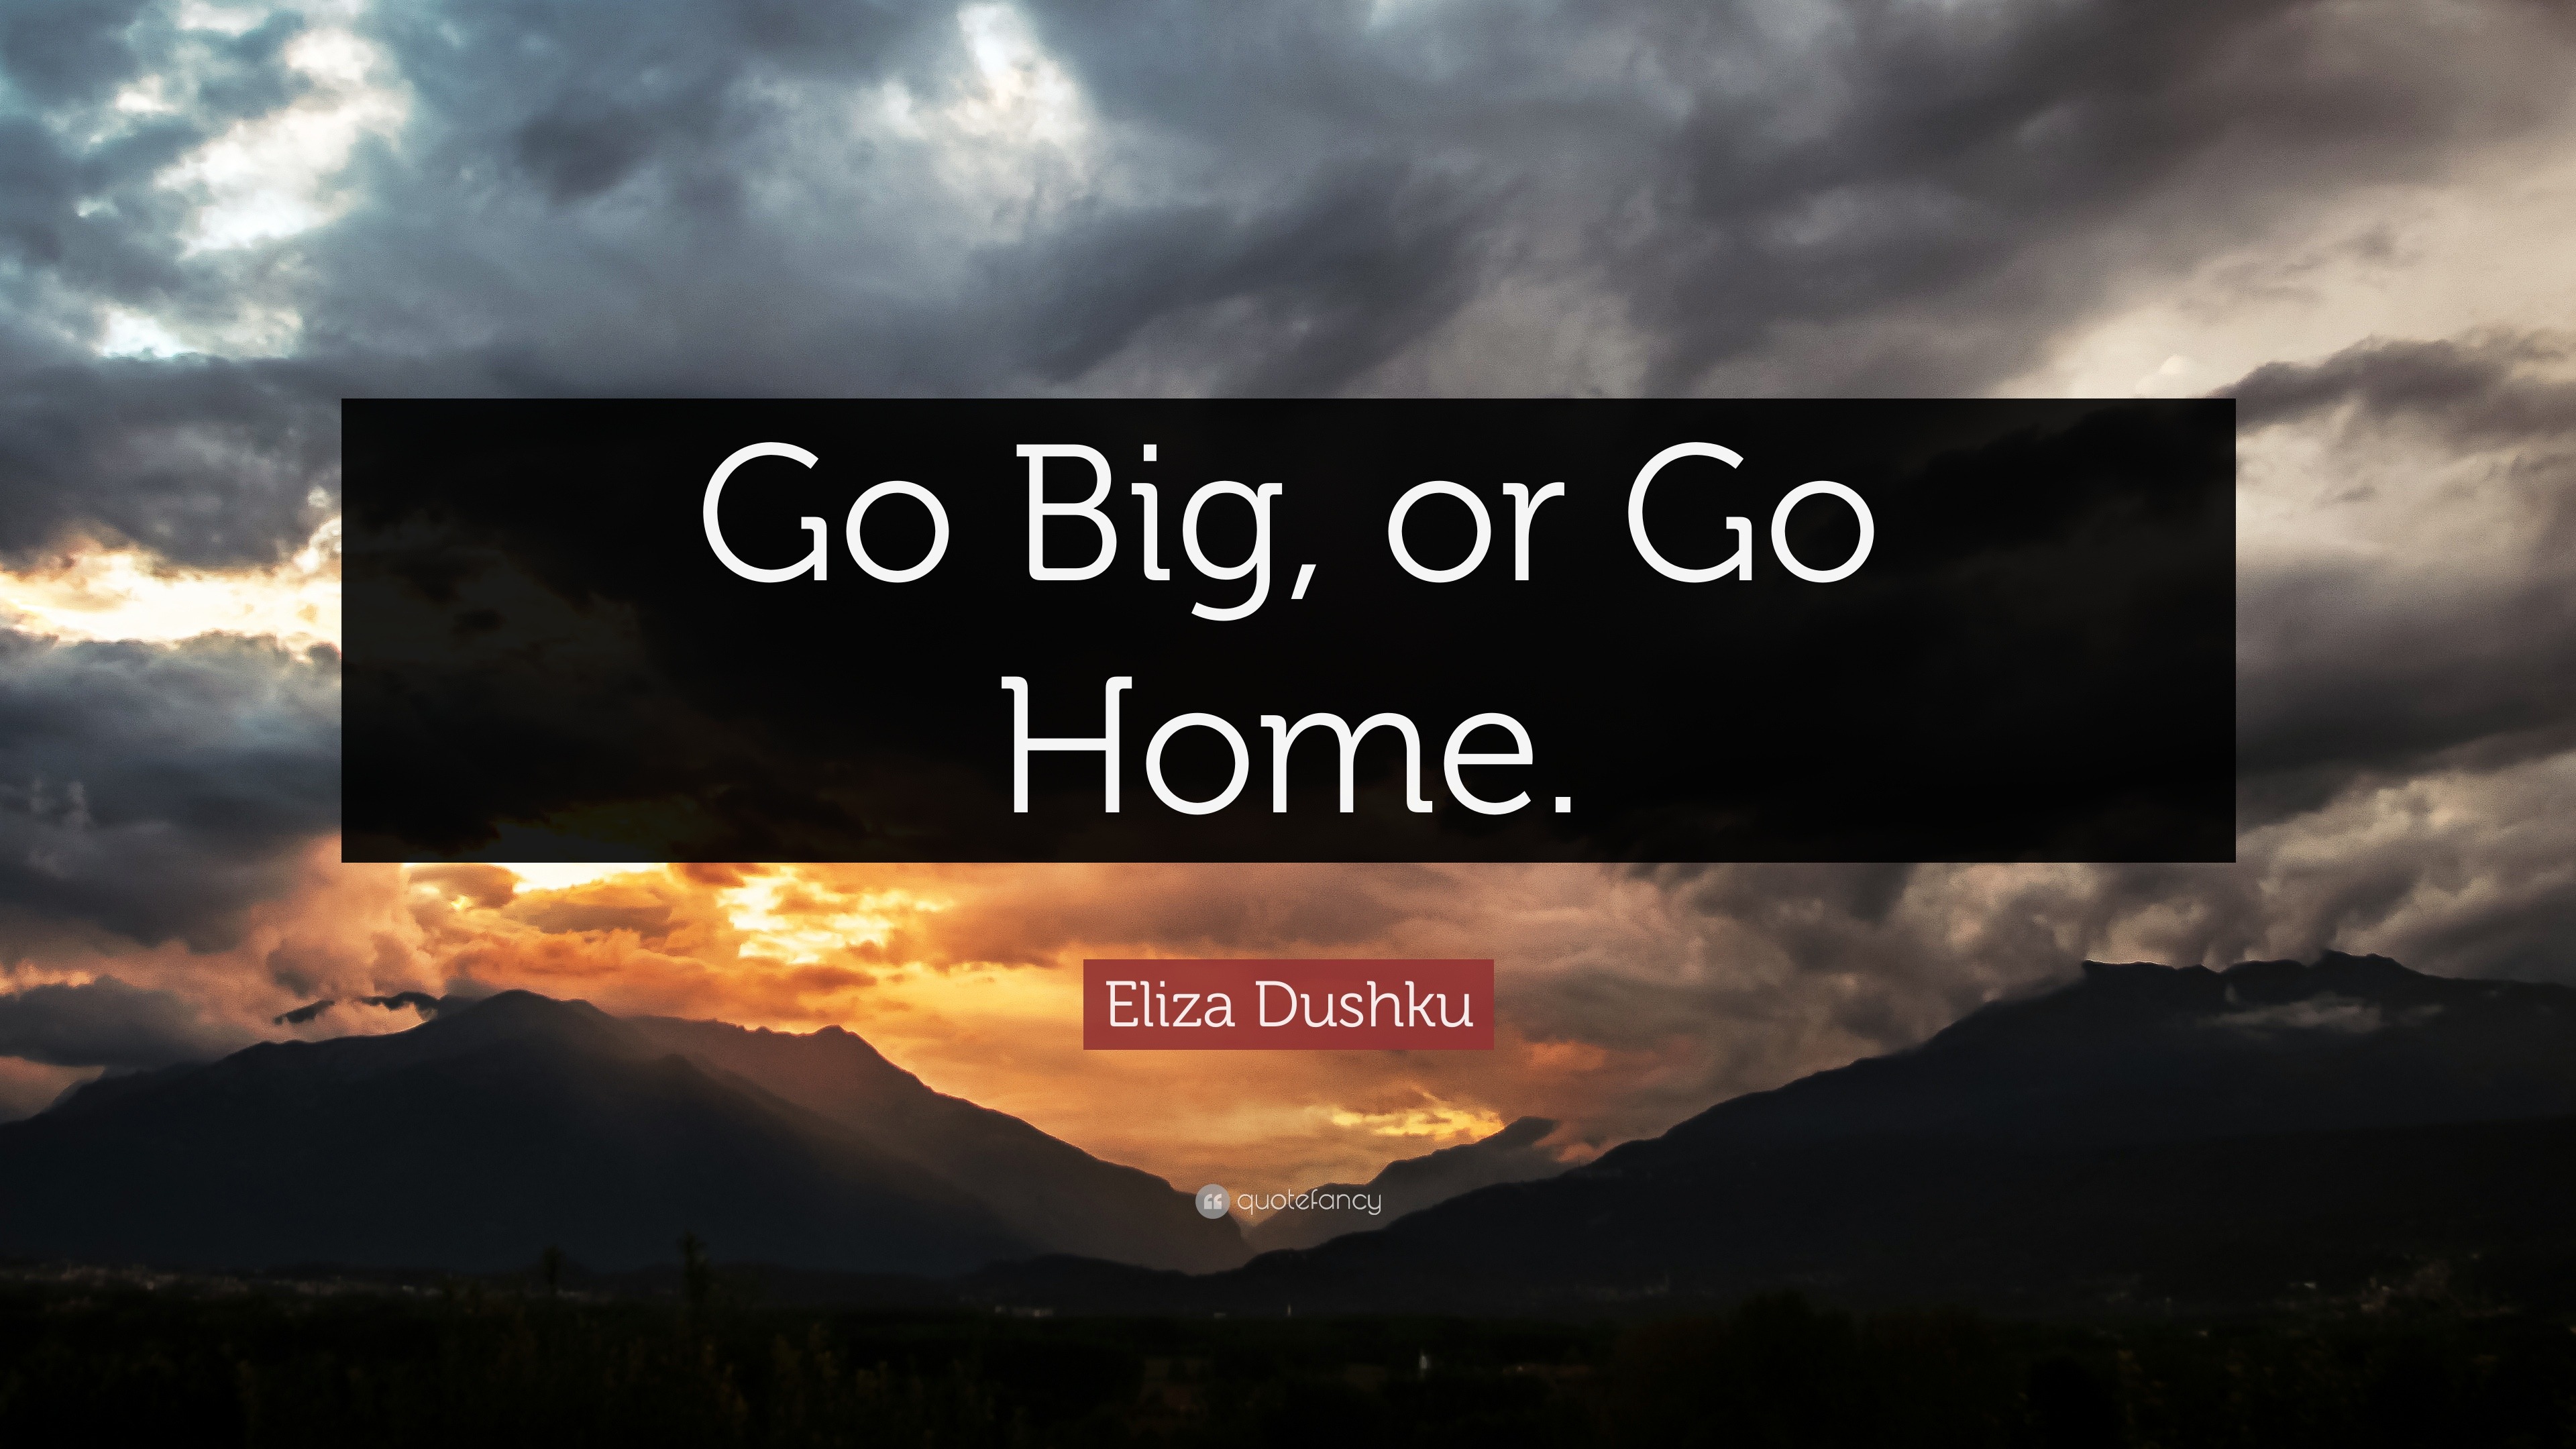 Go Big Or Go Home Origin Eliza Dushku Quote: “Go Big, or Go Home.” (12 wallpapers) - Quotefancy